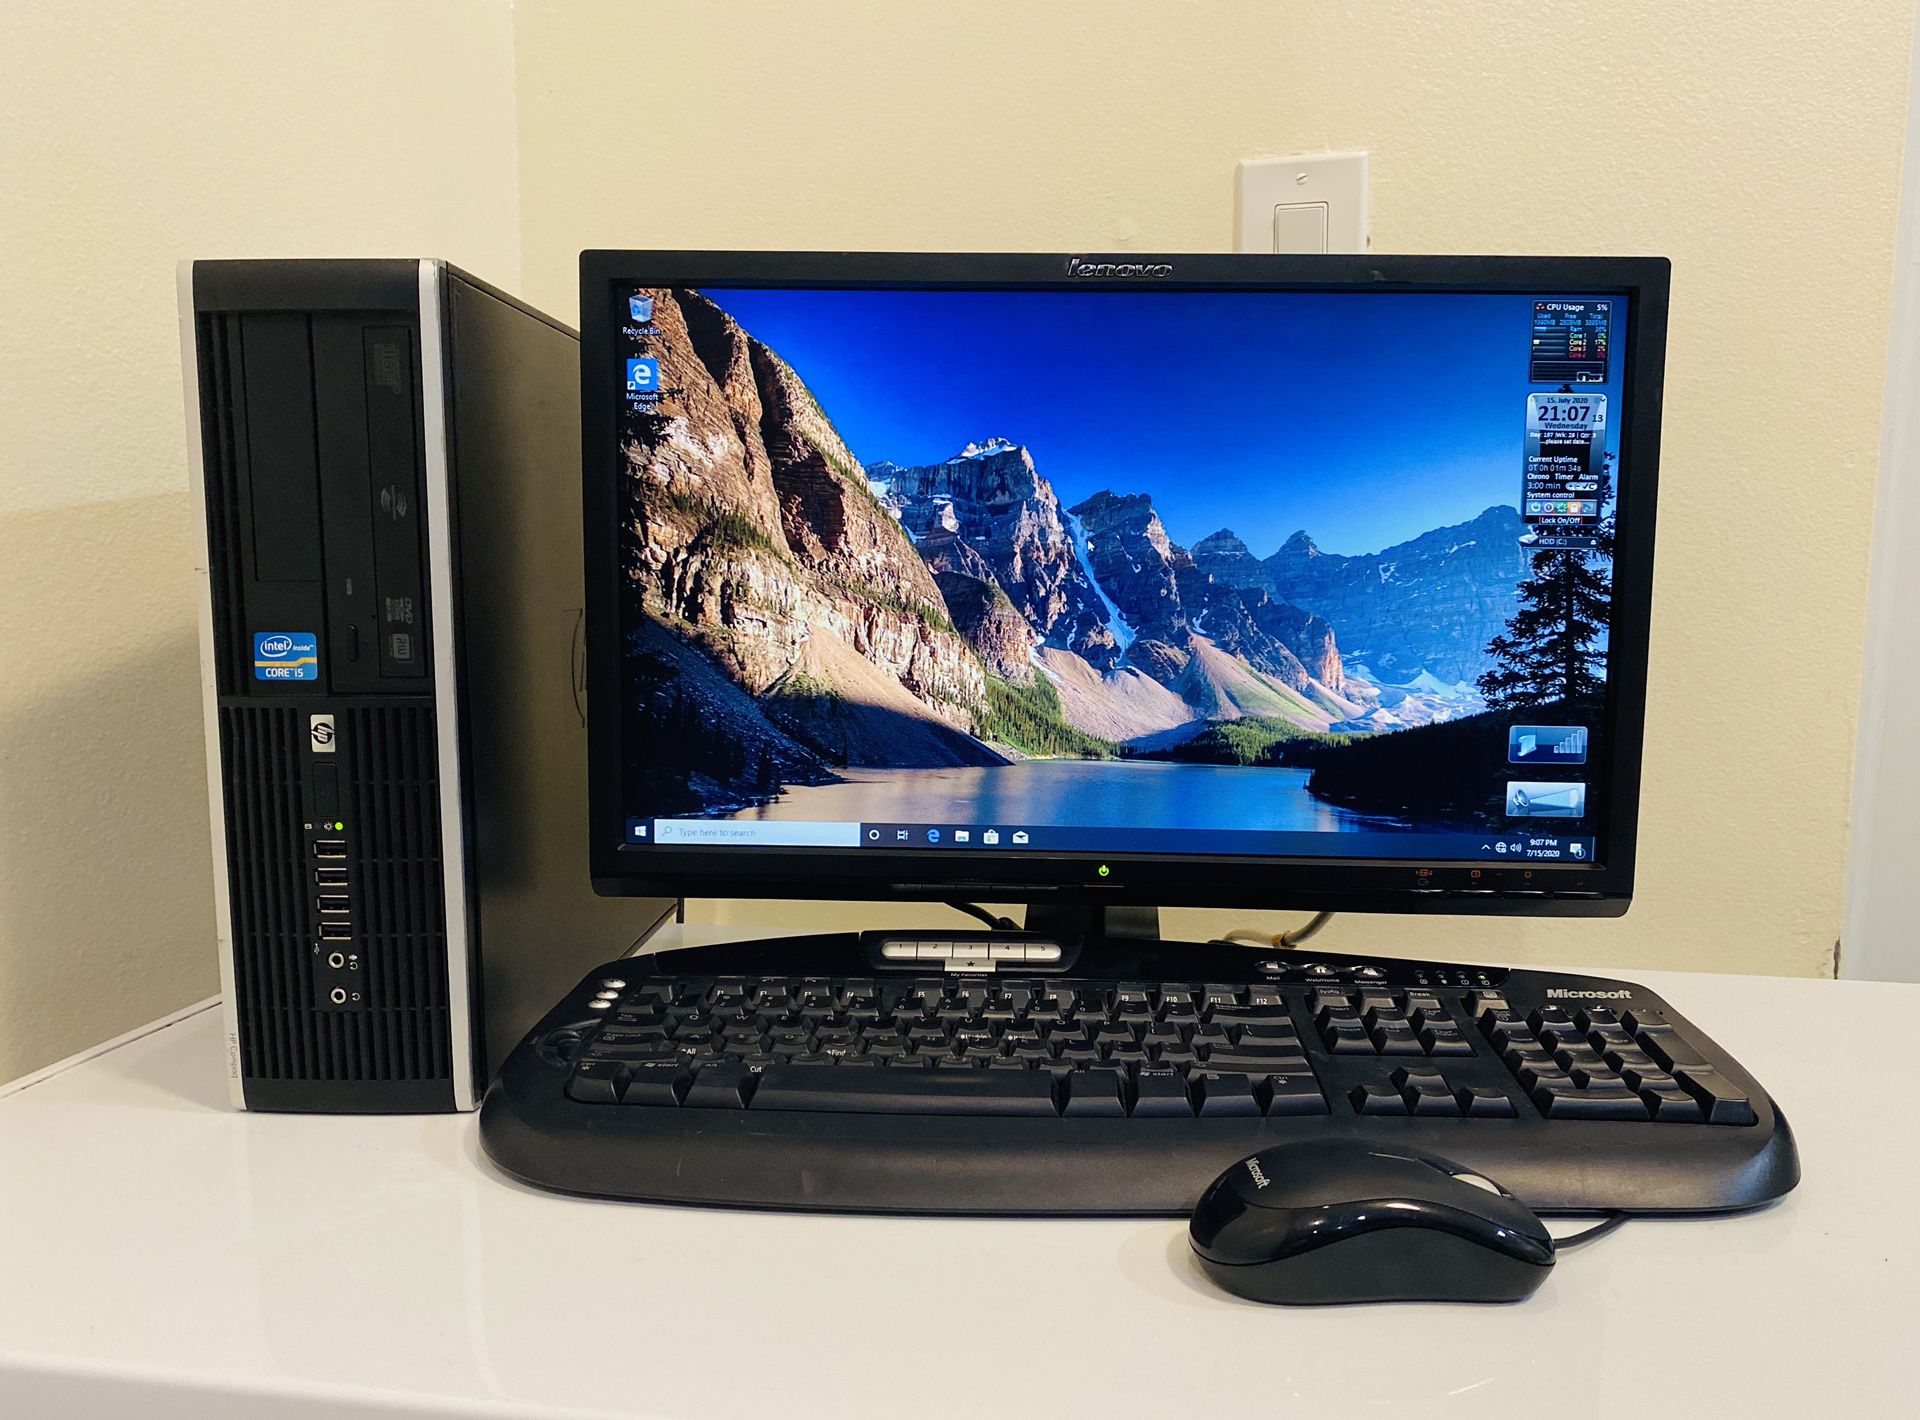 FAST HP Quad Core I5 @3,2GHz, Dual Display Desktop Computer.500GB HDD, 4GB RAM, DP Display Port, HD Graphics, 10 USB Port, 20” Monit/Keyb/Mouse, Win10